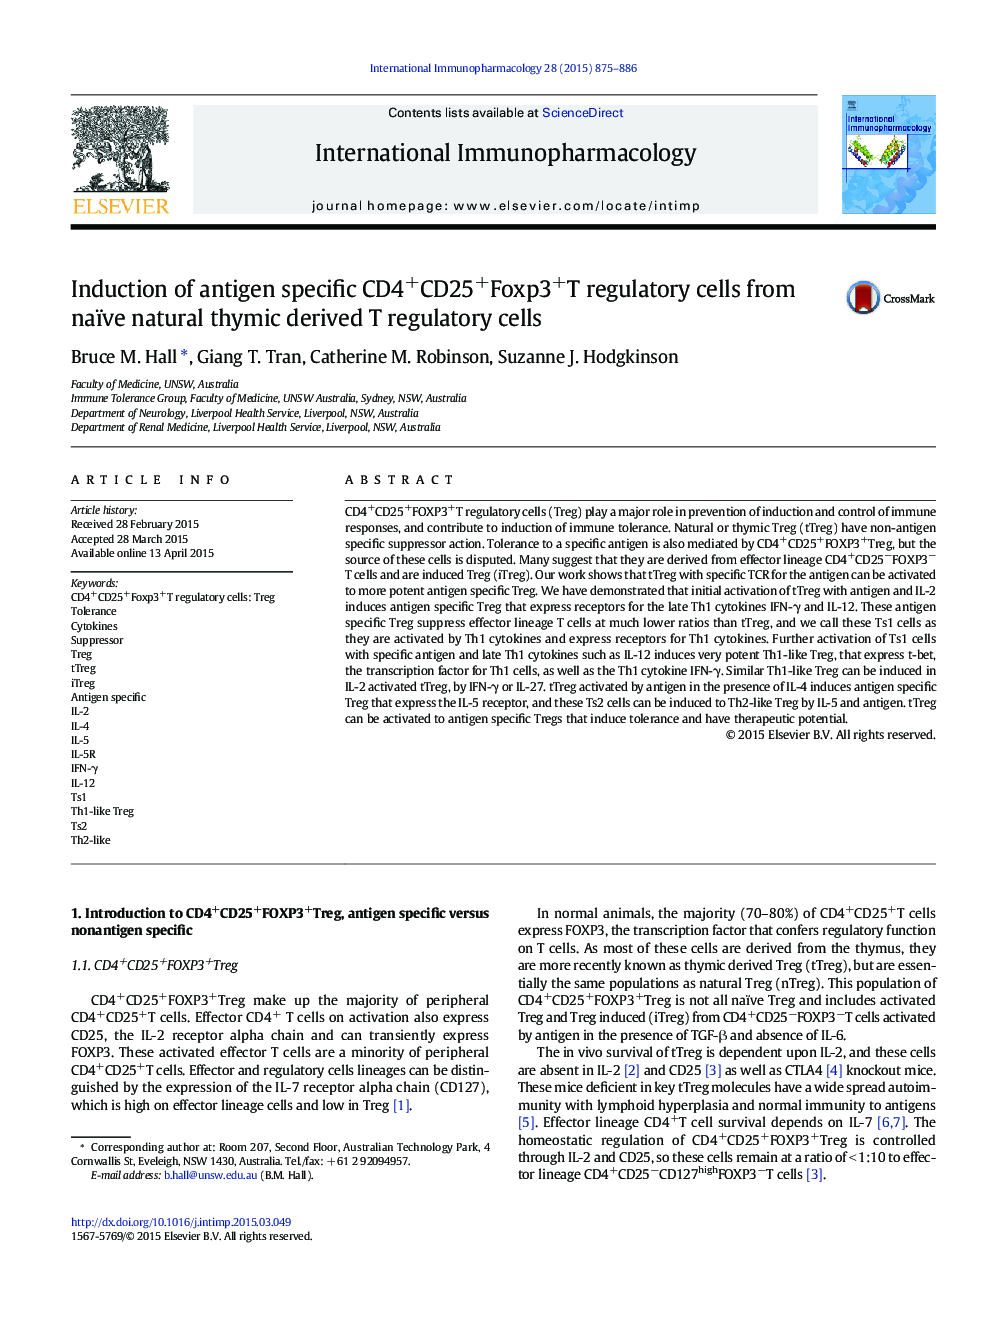 Induction of antigen specific CD4+CD25+Foxp3+T regulatory cells from naïve natural thymic derived T regulatory cells